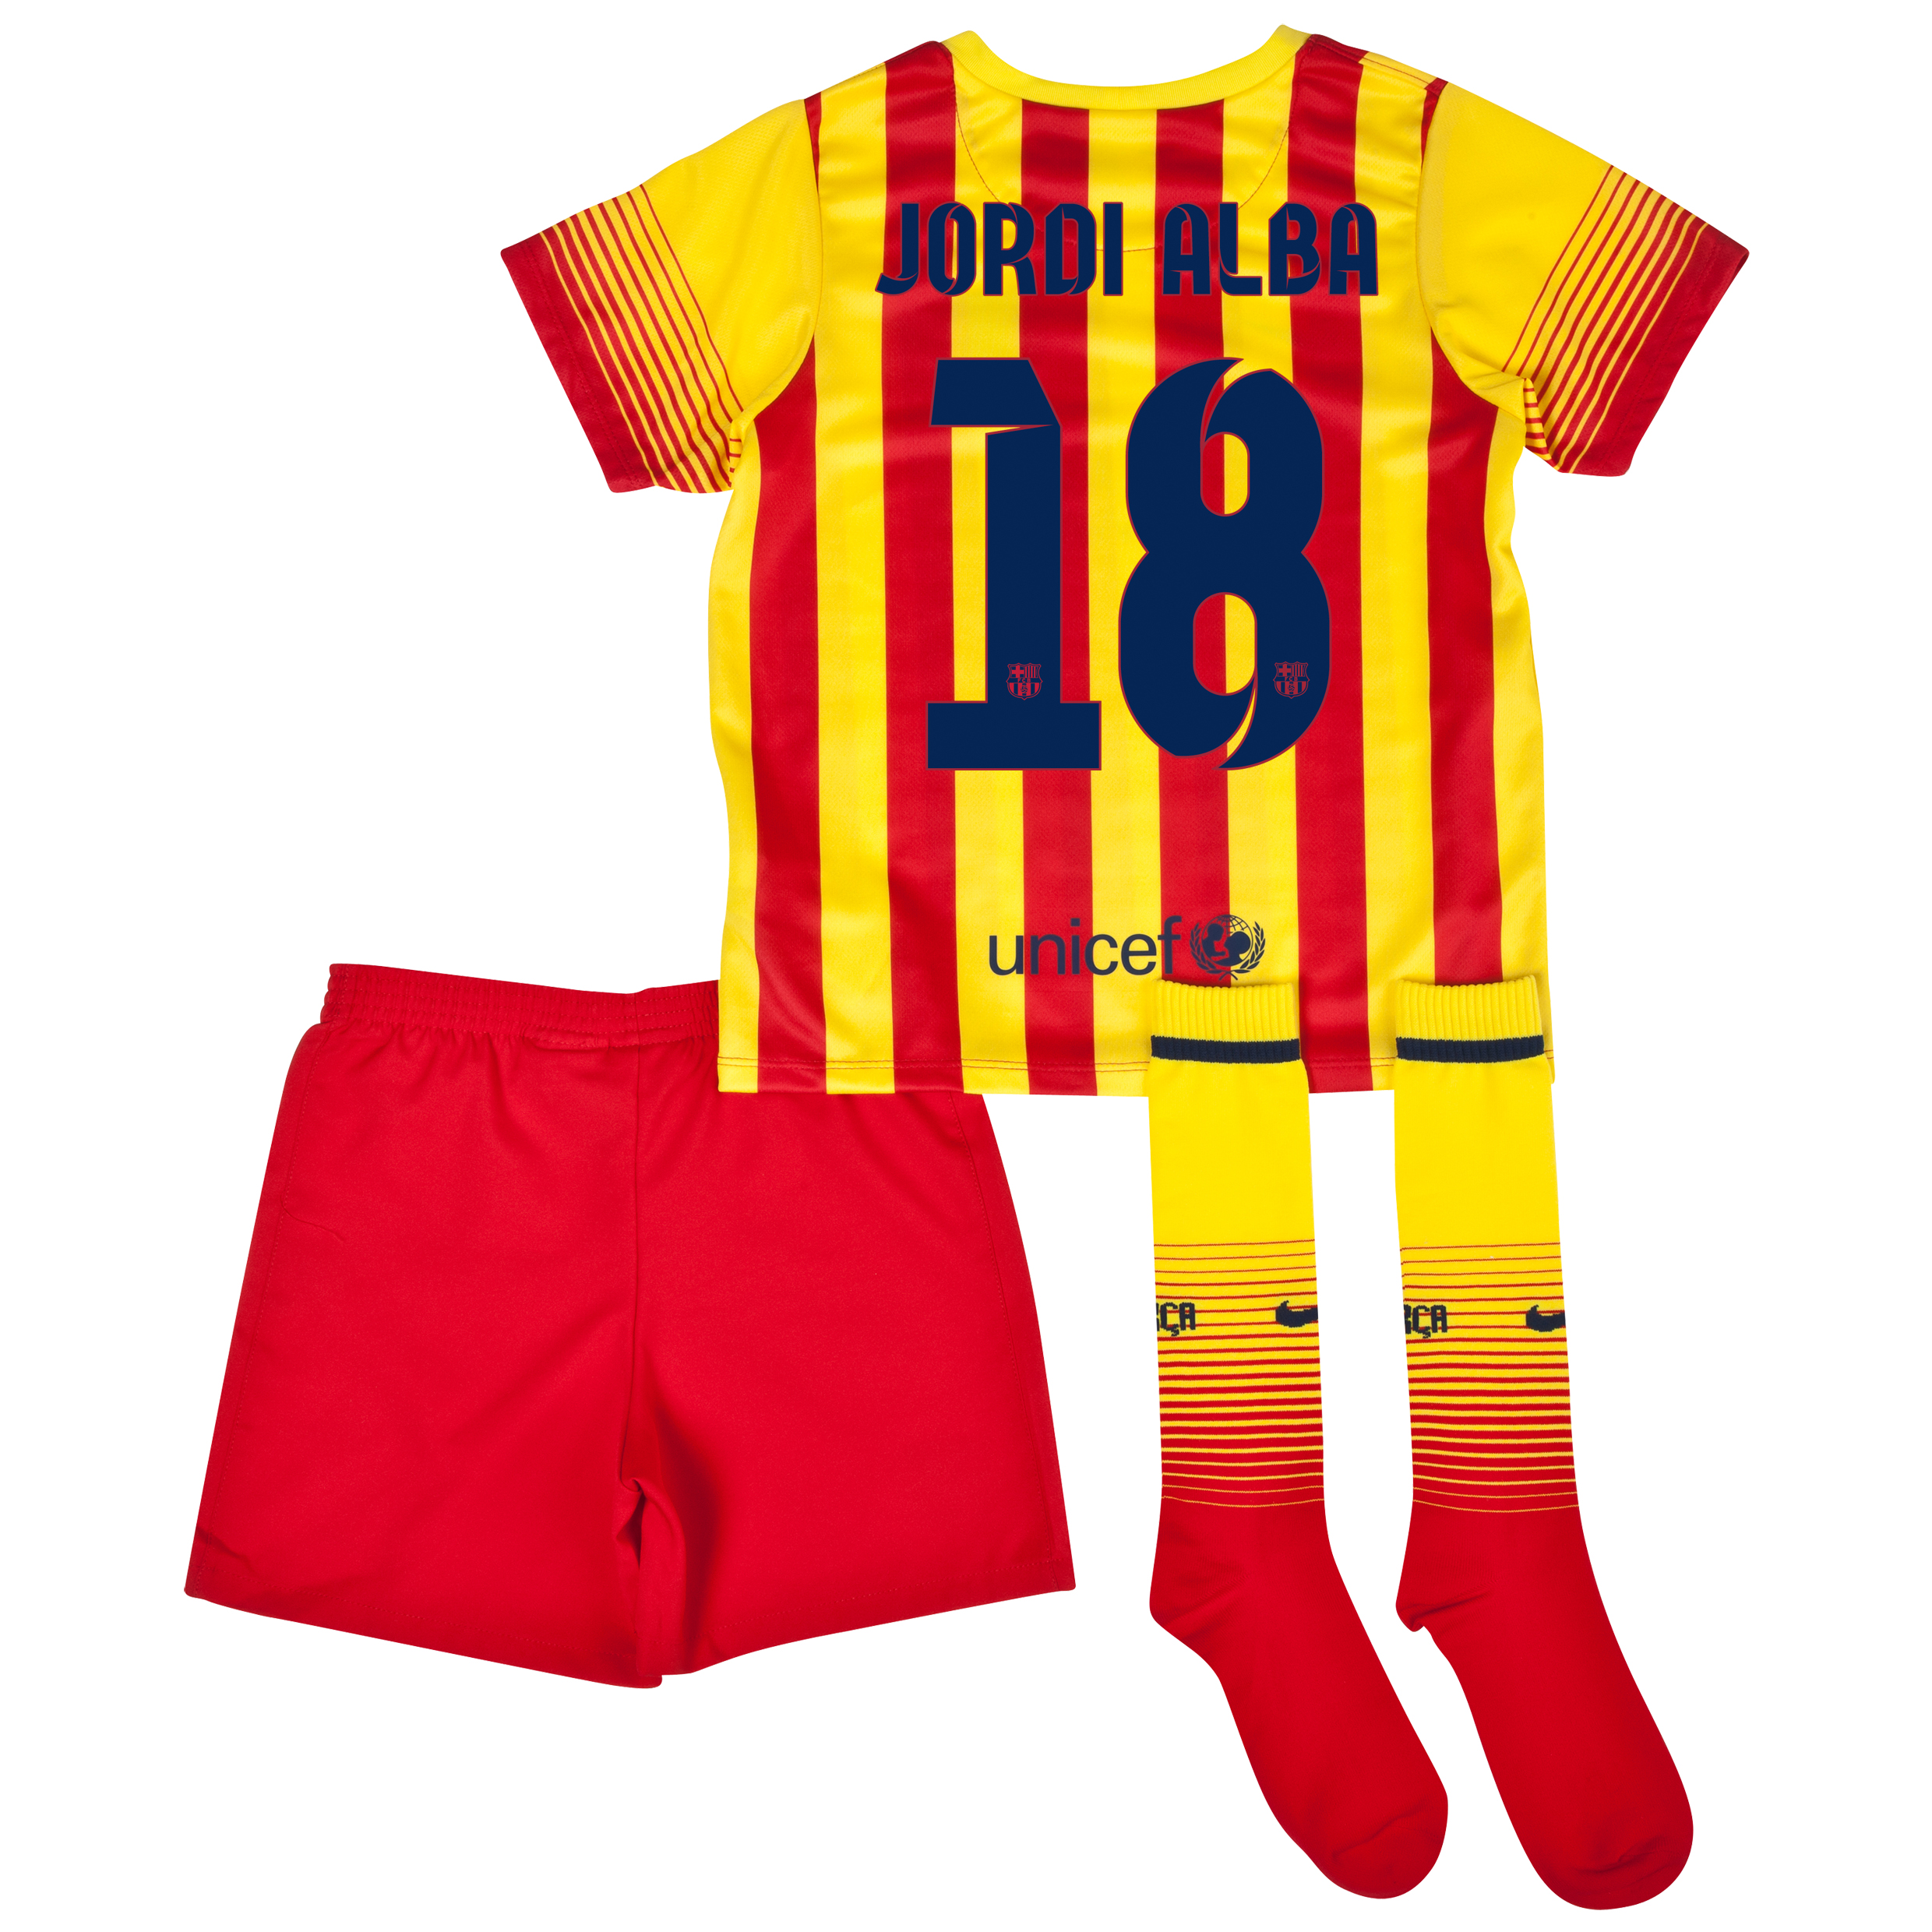 Barcelona Away Kit 2013/14 - Little Boys with Jordi Alba 18 printing